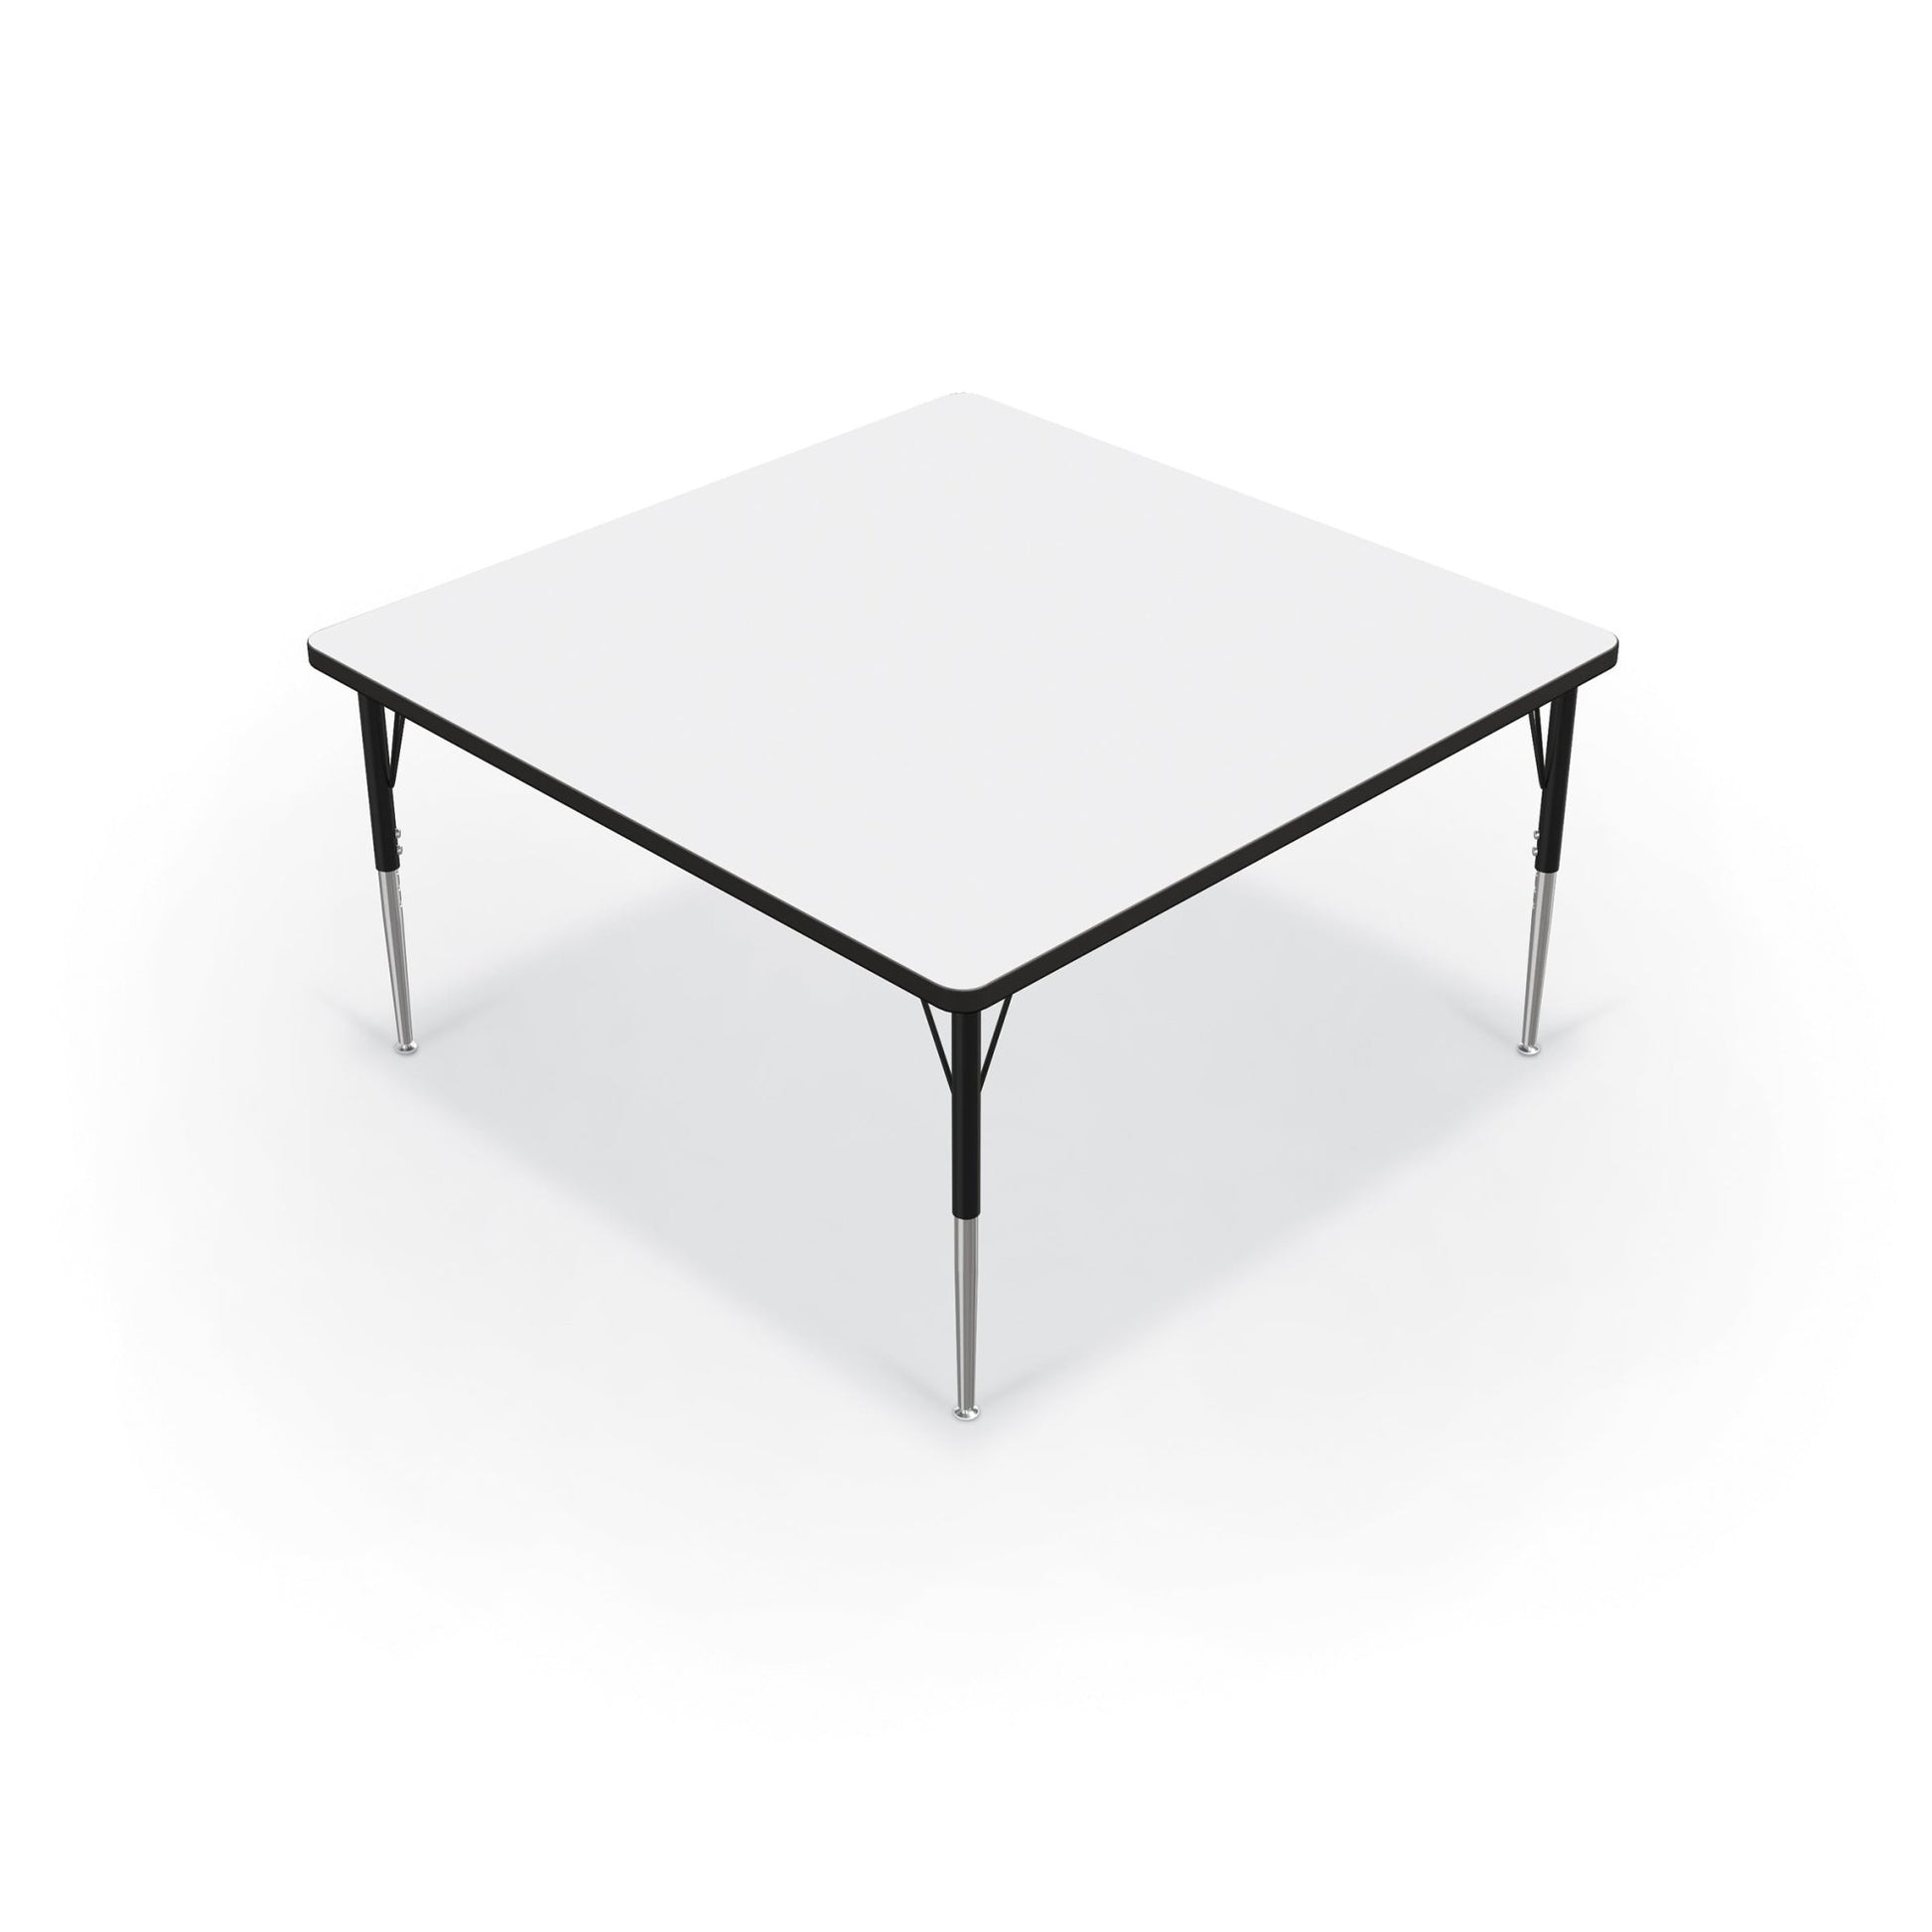 Mooreco Activity Table - 48"D x 48"W - Square - Black Edgeband (Mooreco 90527-L) - SchoolOutlet